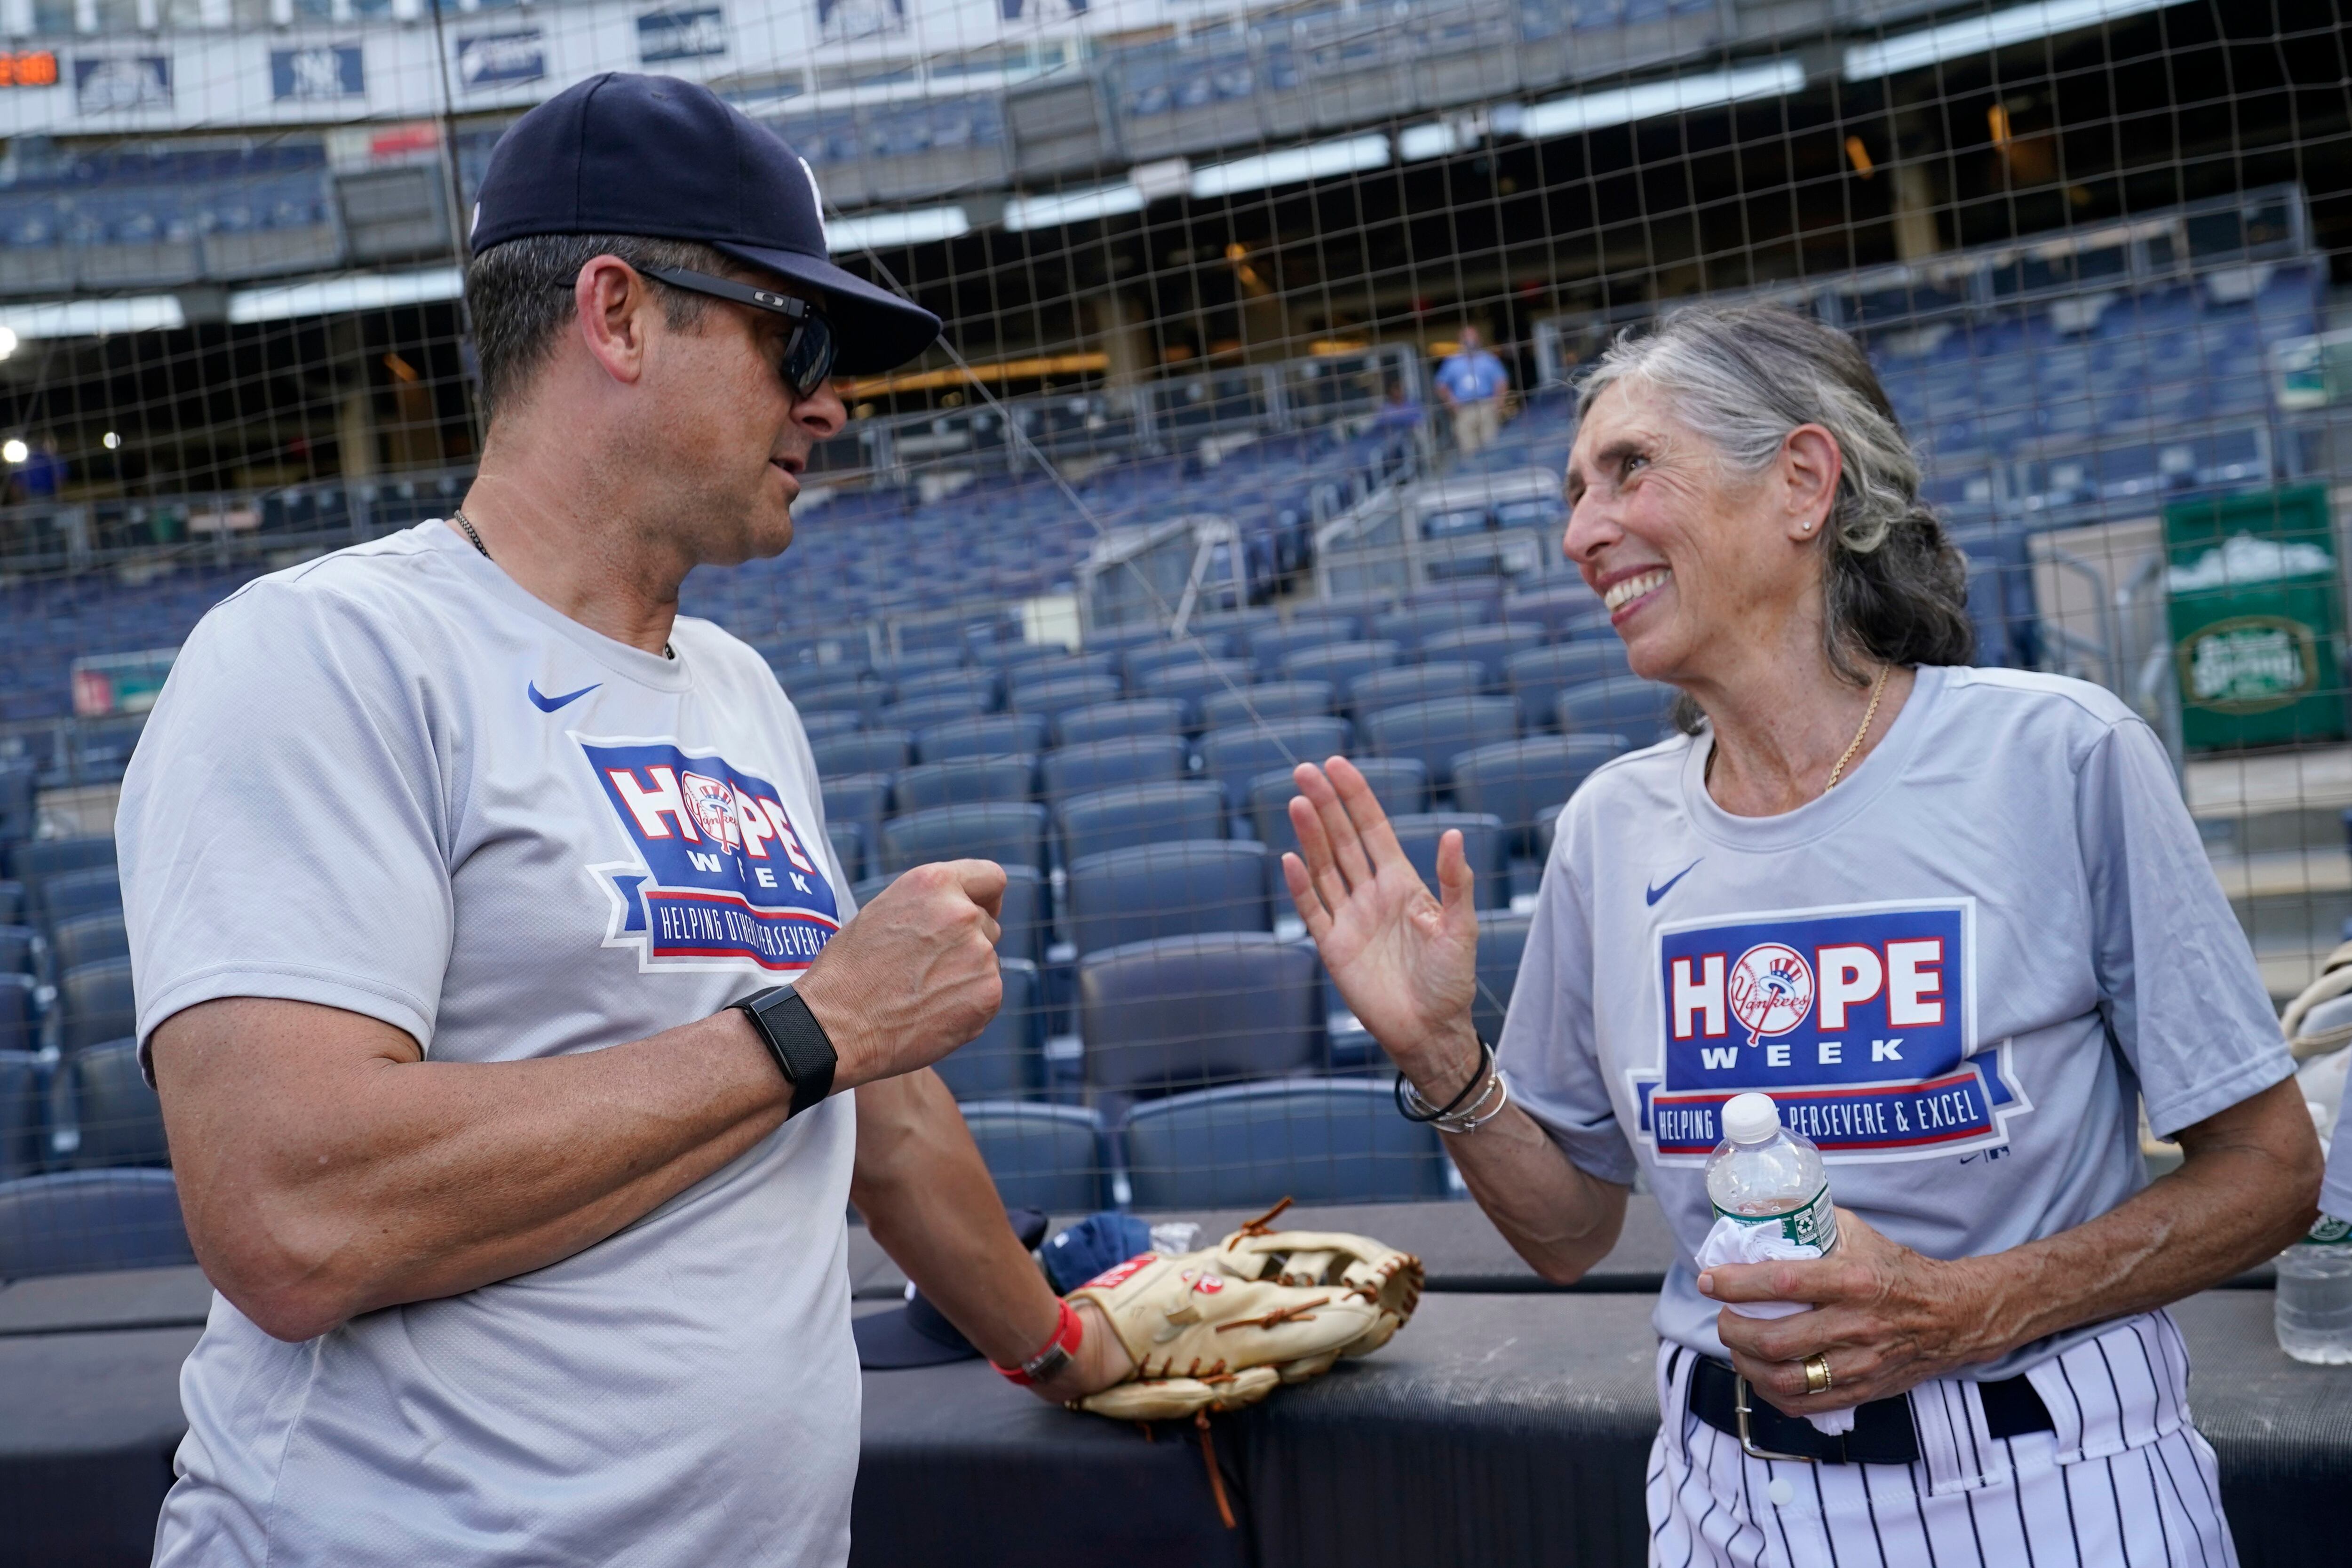 Gwen Goldman realizes her Yankees bat girl dream 60 years later